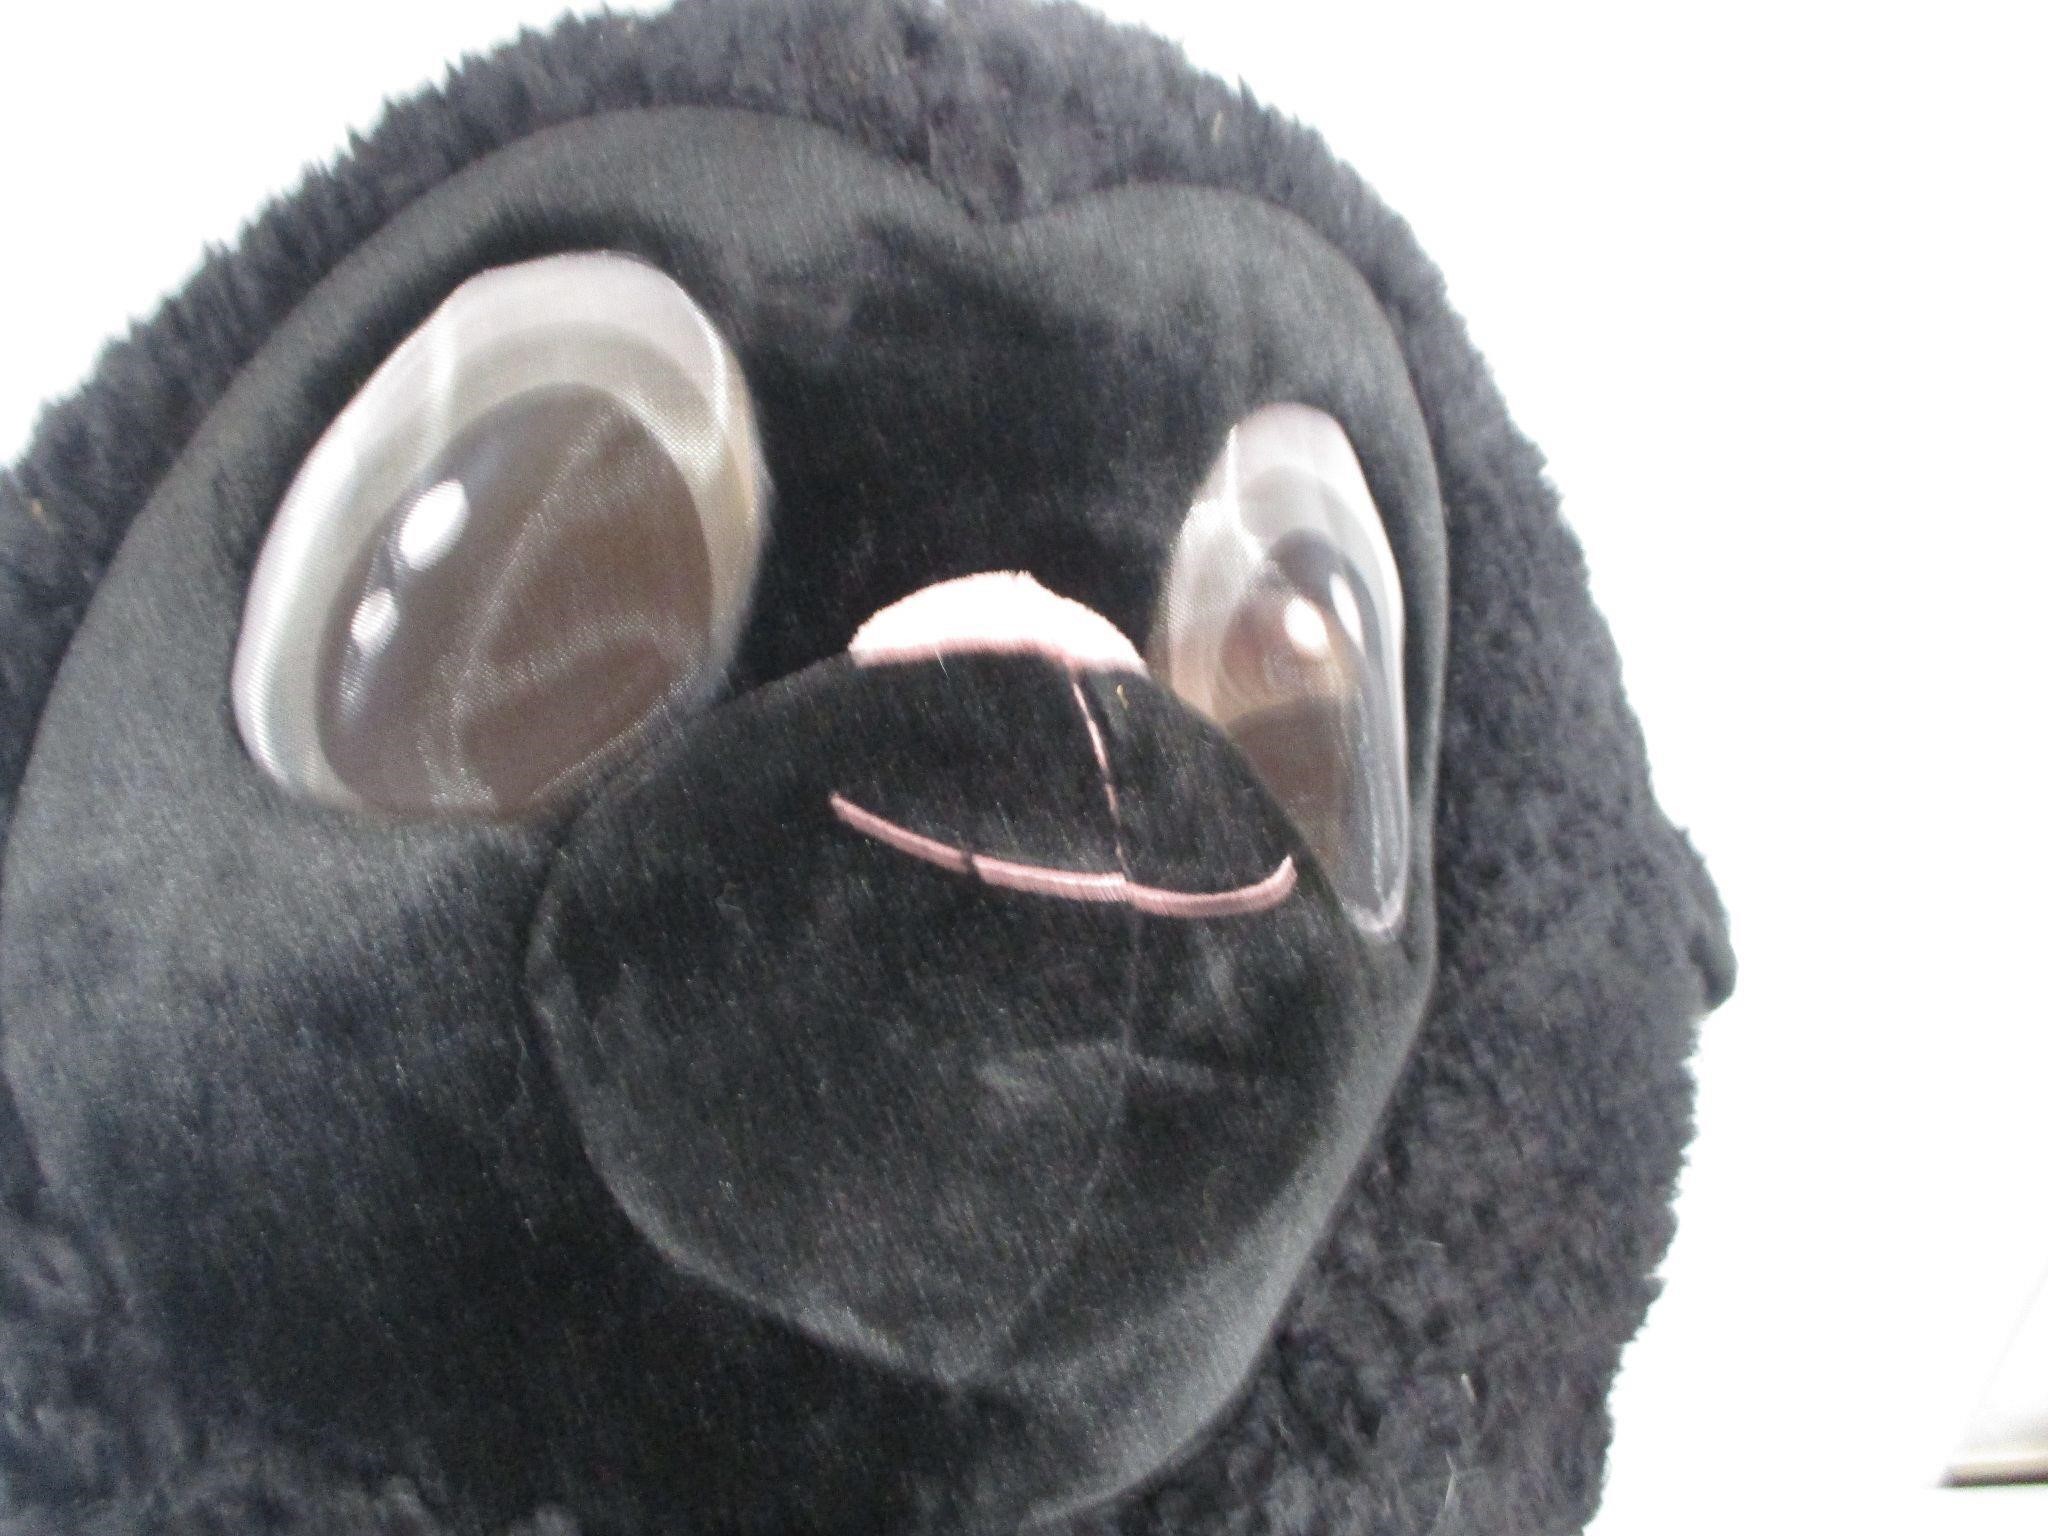 Maskimals Black Sheep Head Costume